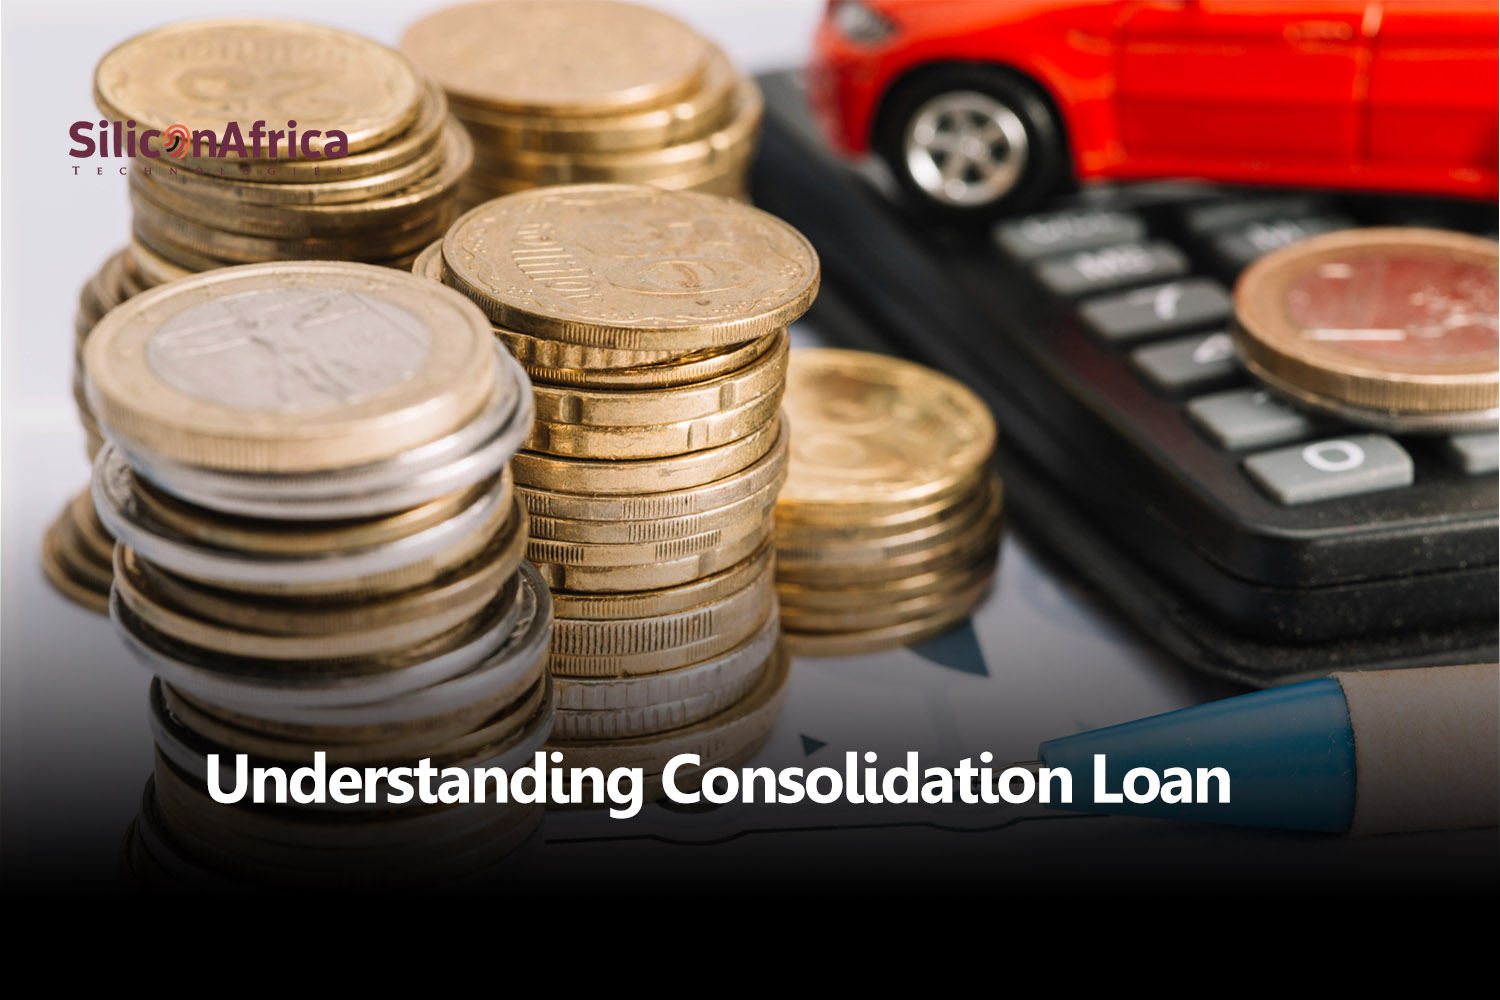 Uderstanding Consolidation Loan